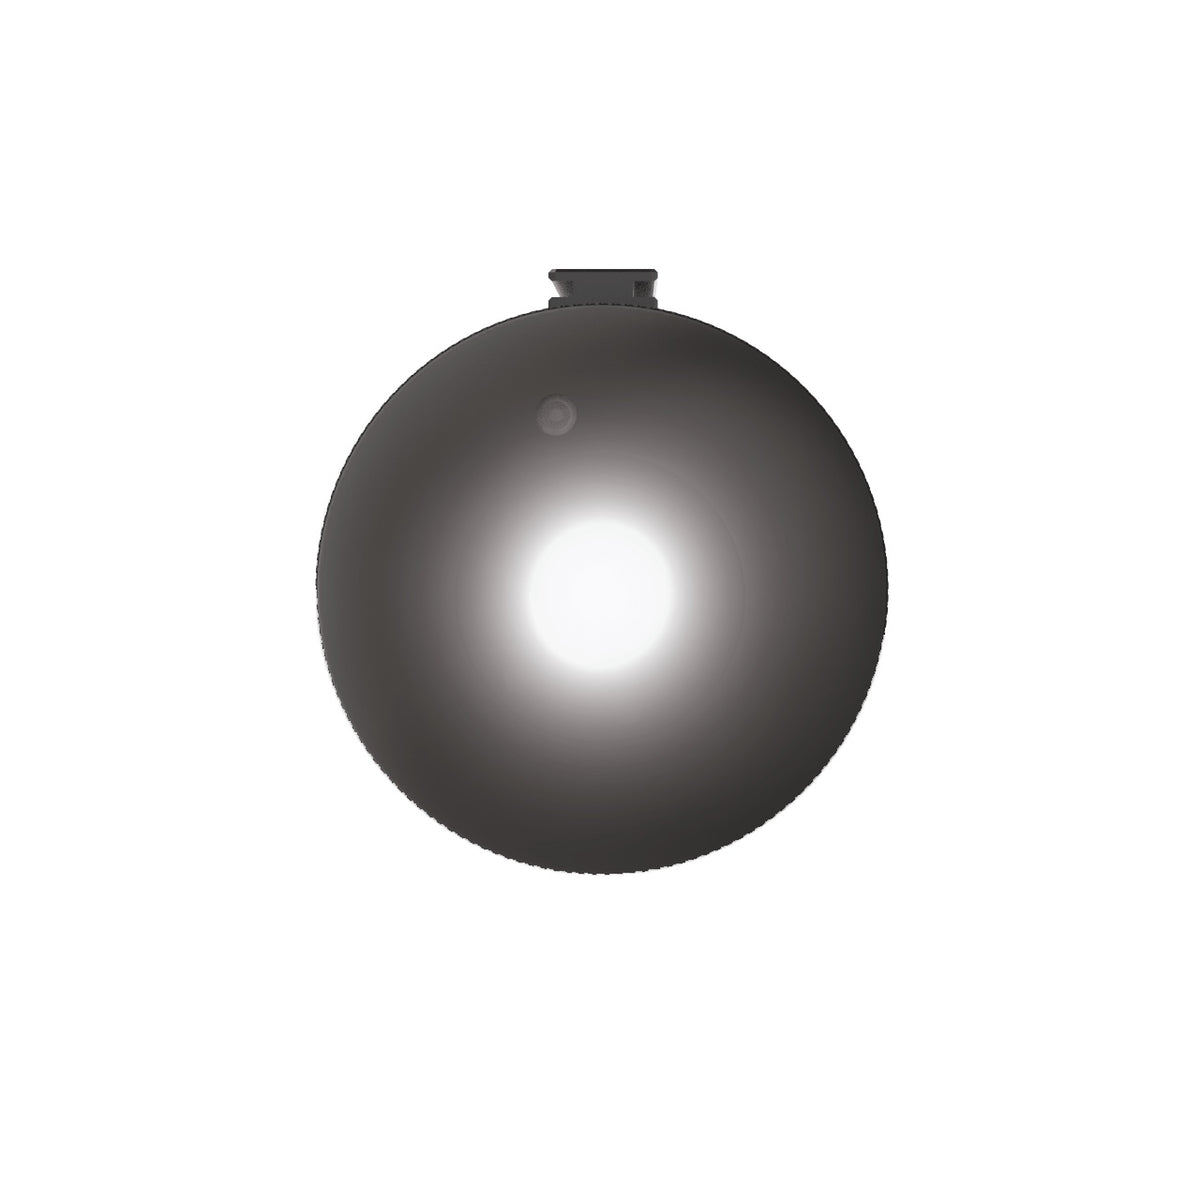 ScubaJet BEAM 1,500 Lumen LED Light. Black circle shape with a bright white light in the middle